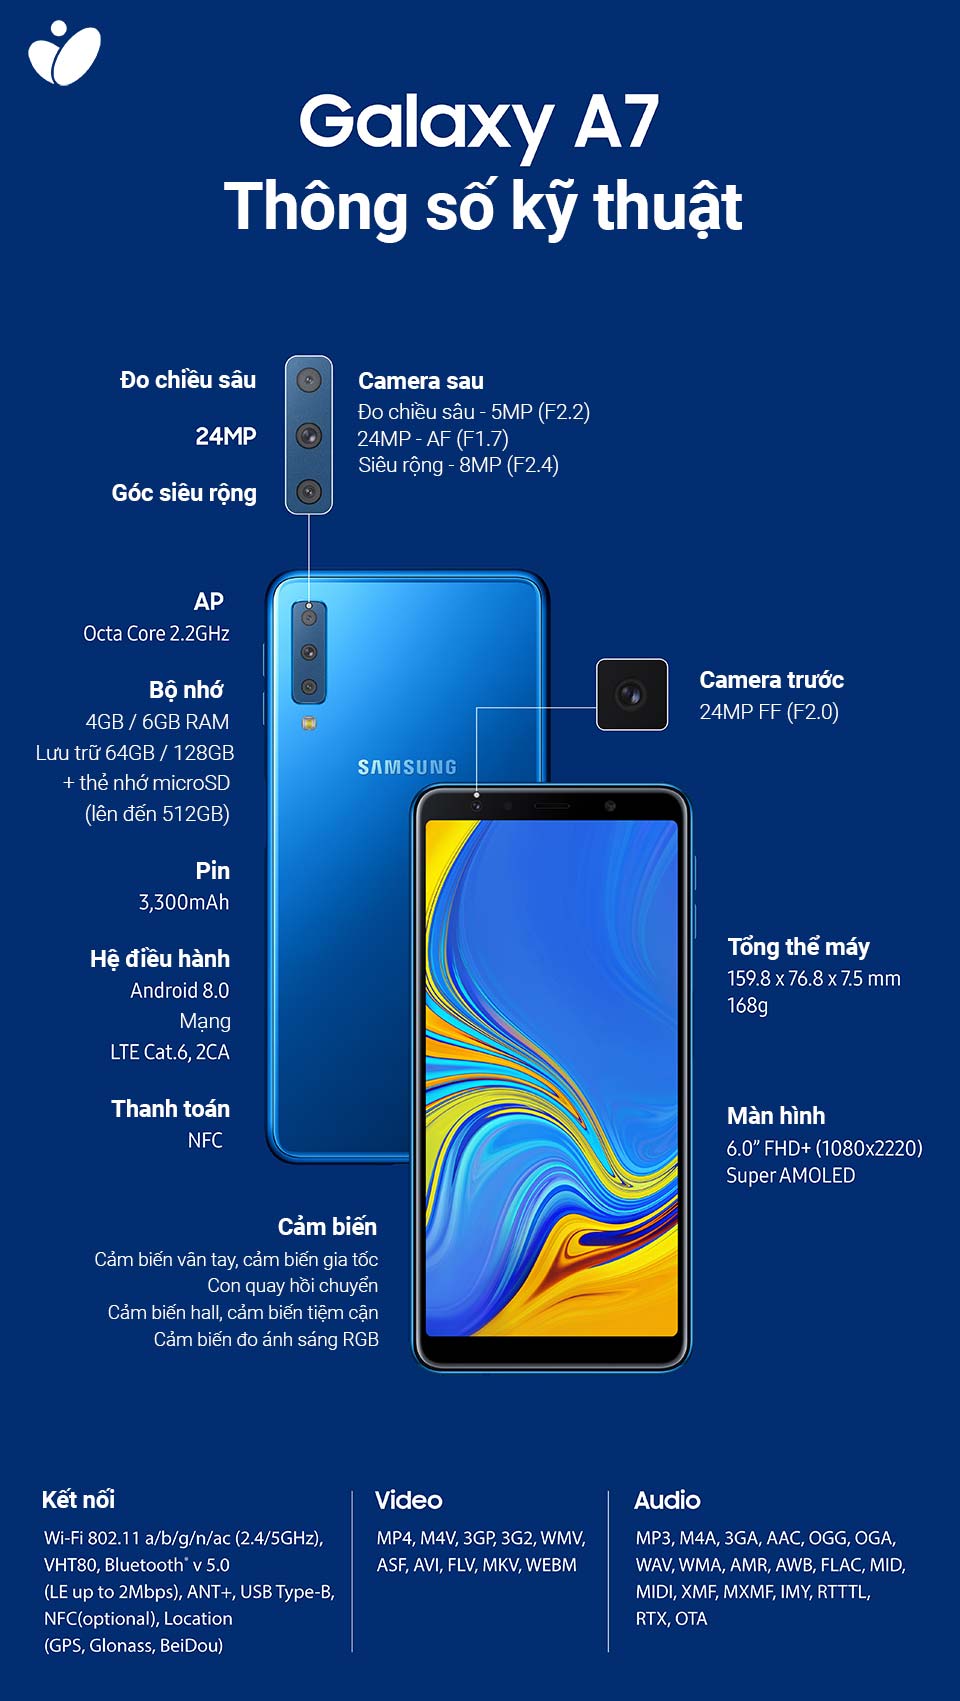 Samsung_Galaxy_A7_infographic.jpg